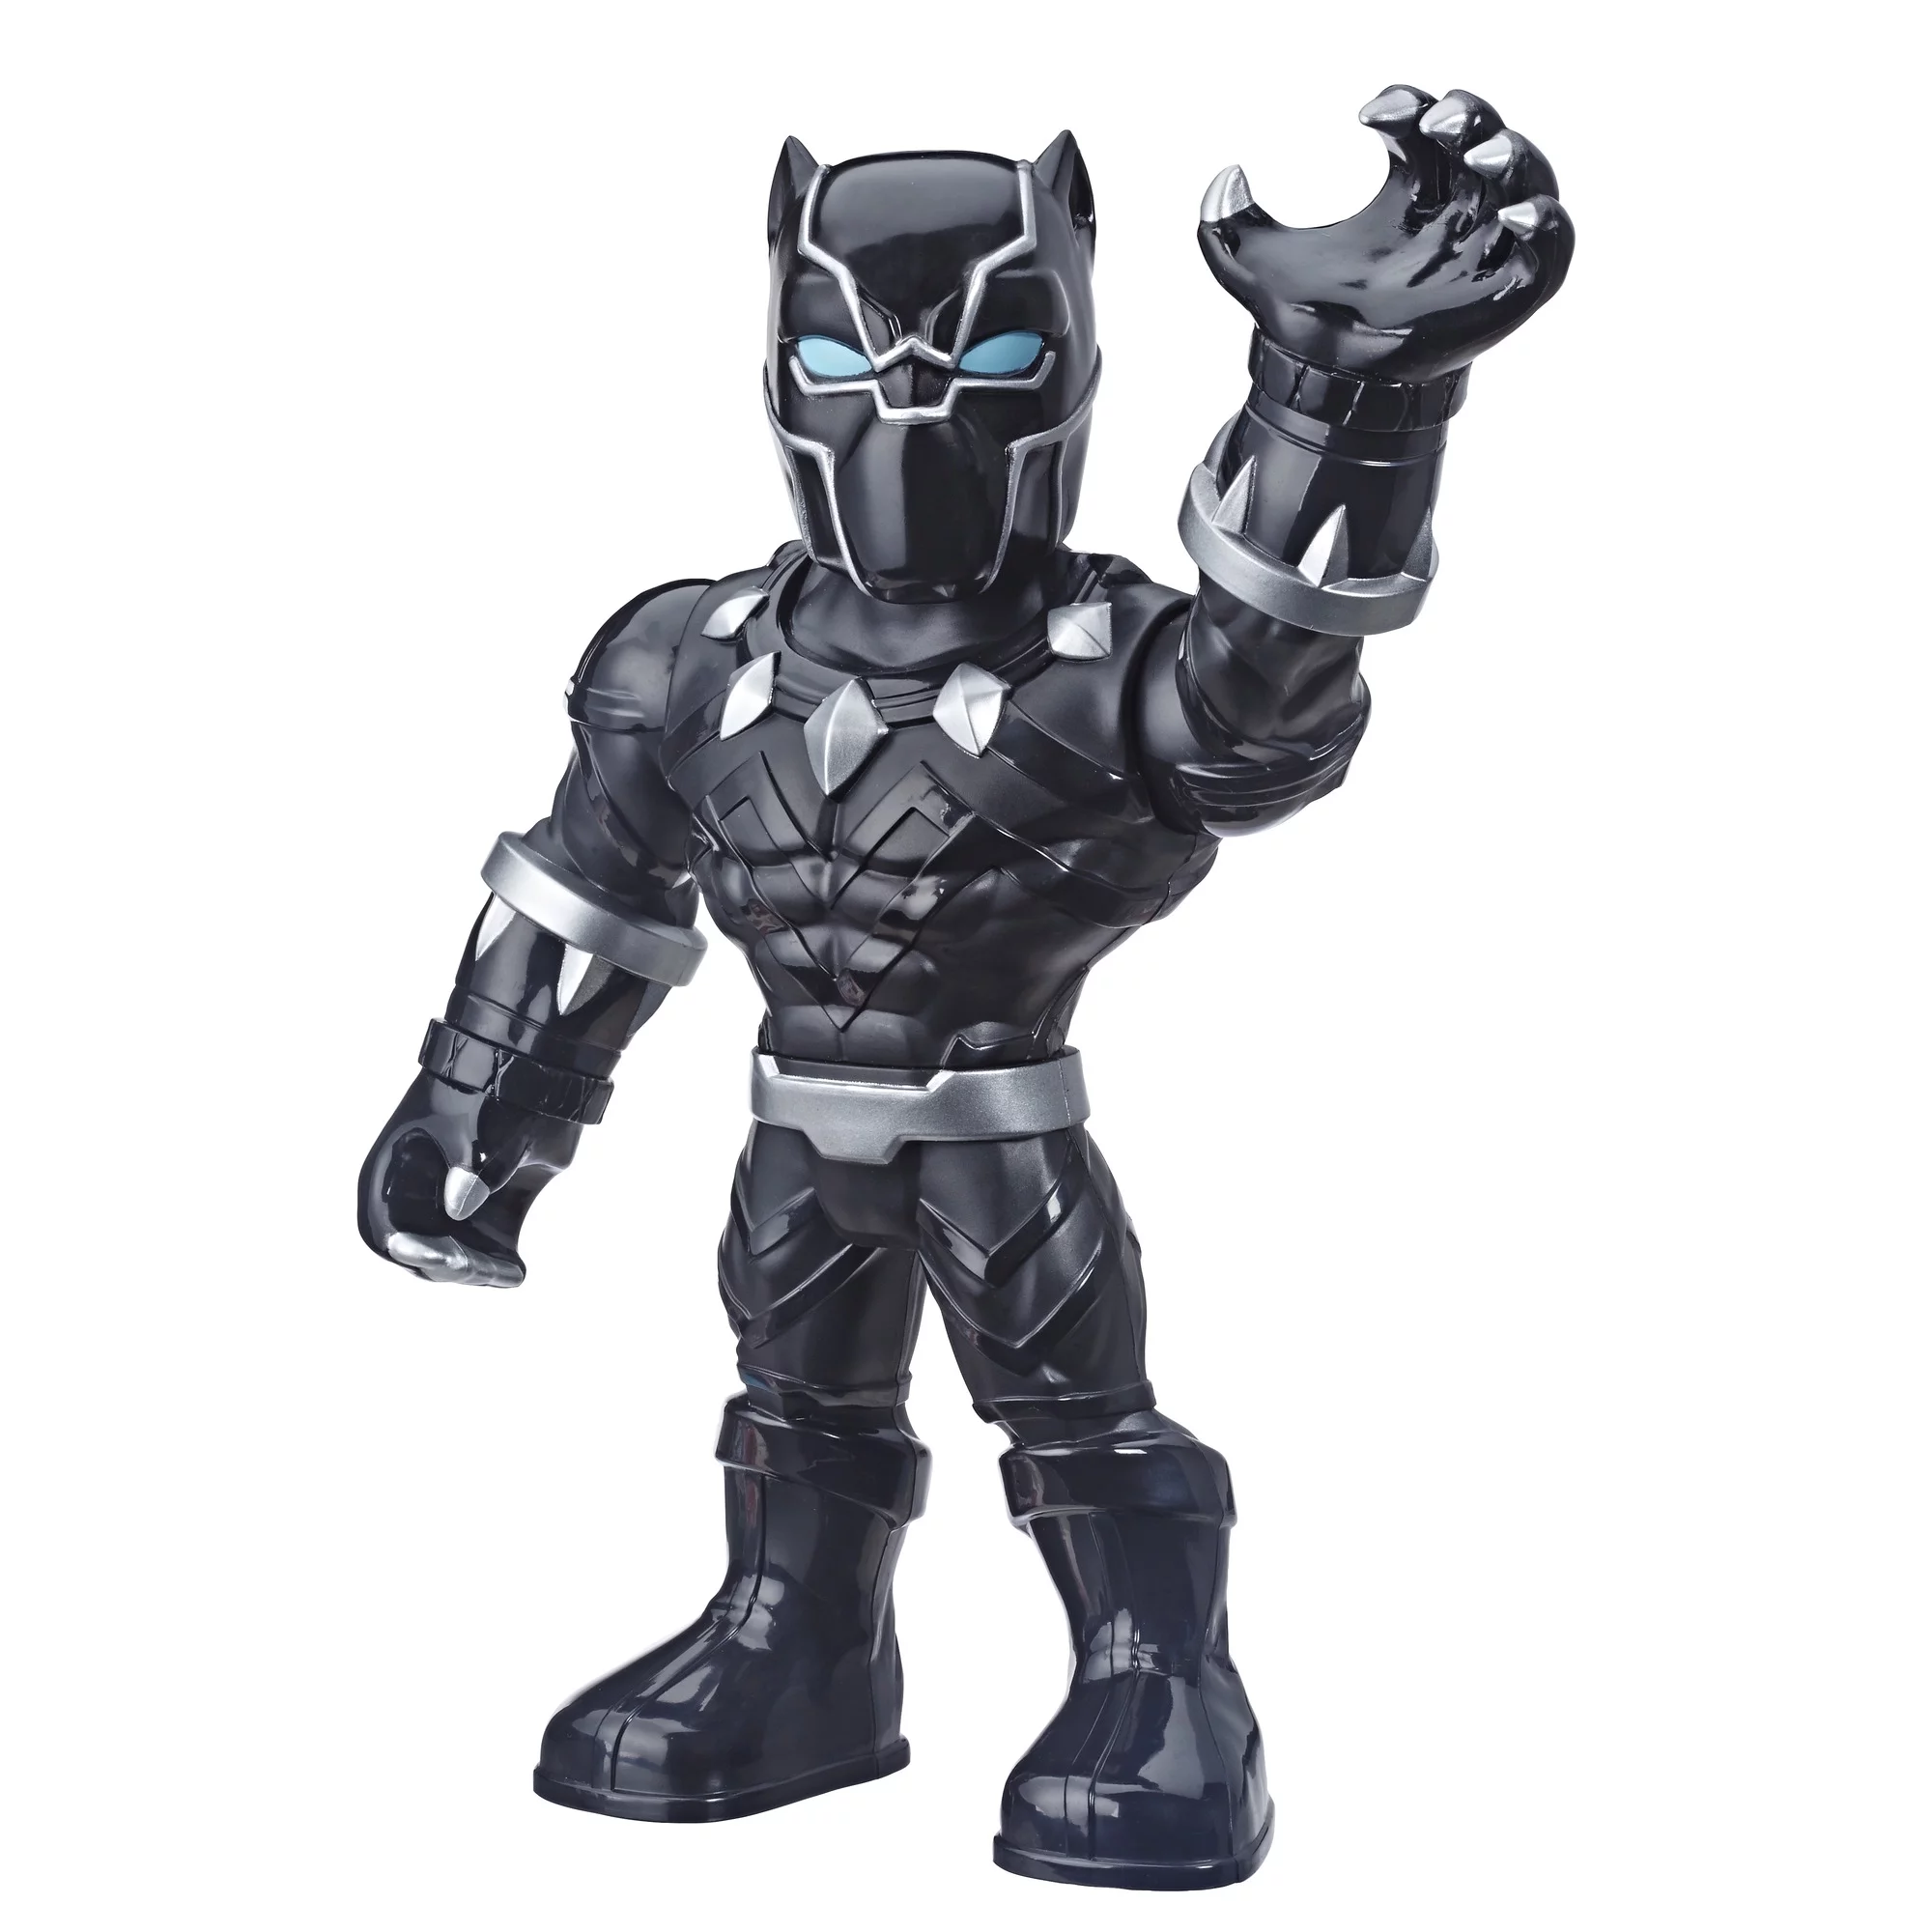 Playskool Marvel Super Hero Adventures Mega Mighties Black Panther Figure